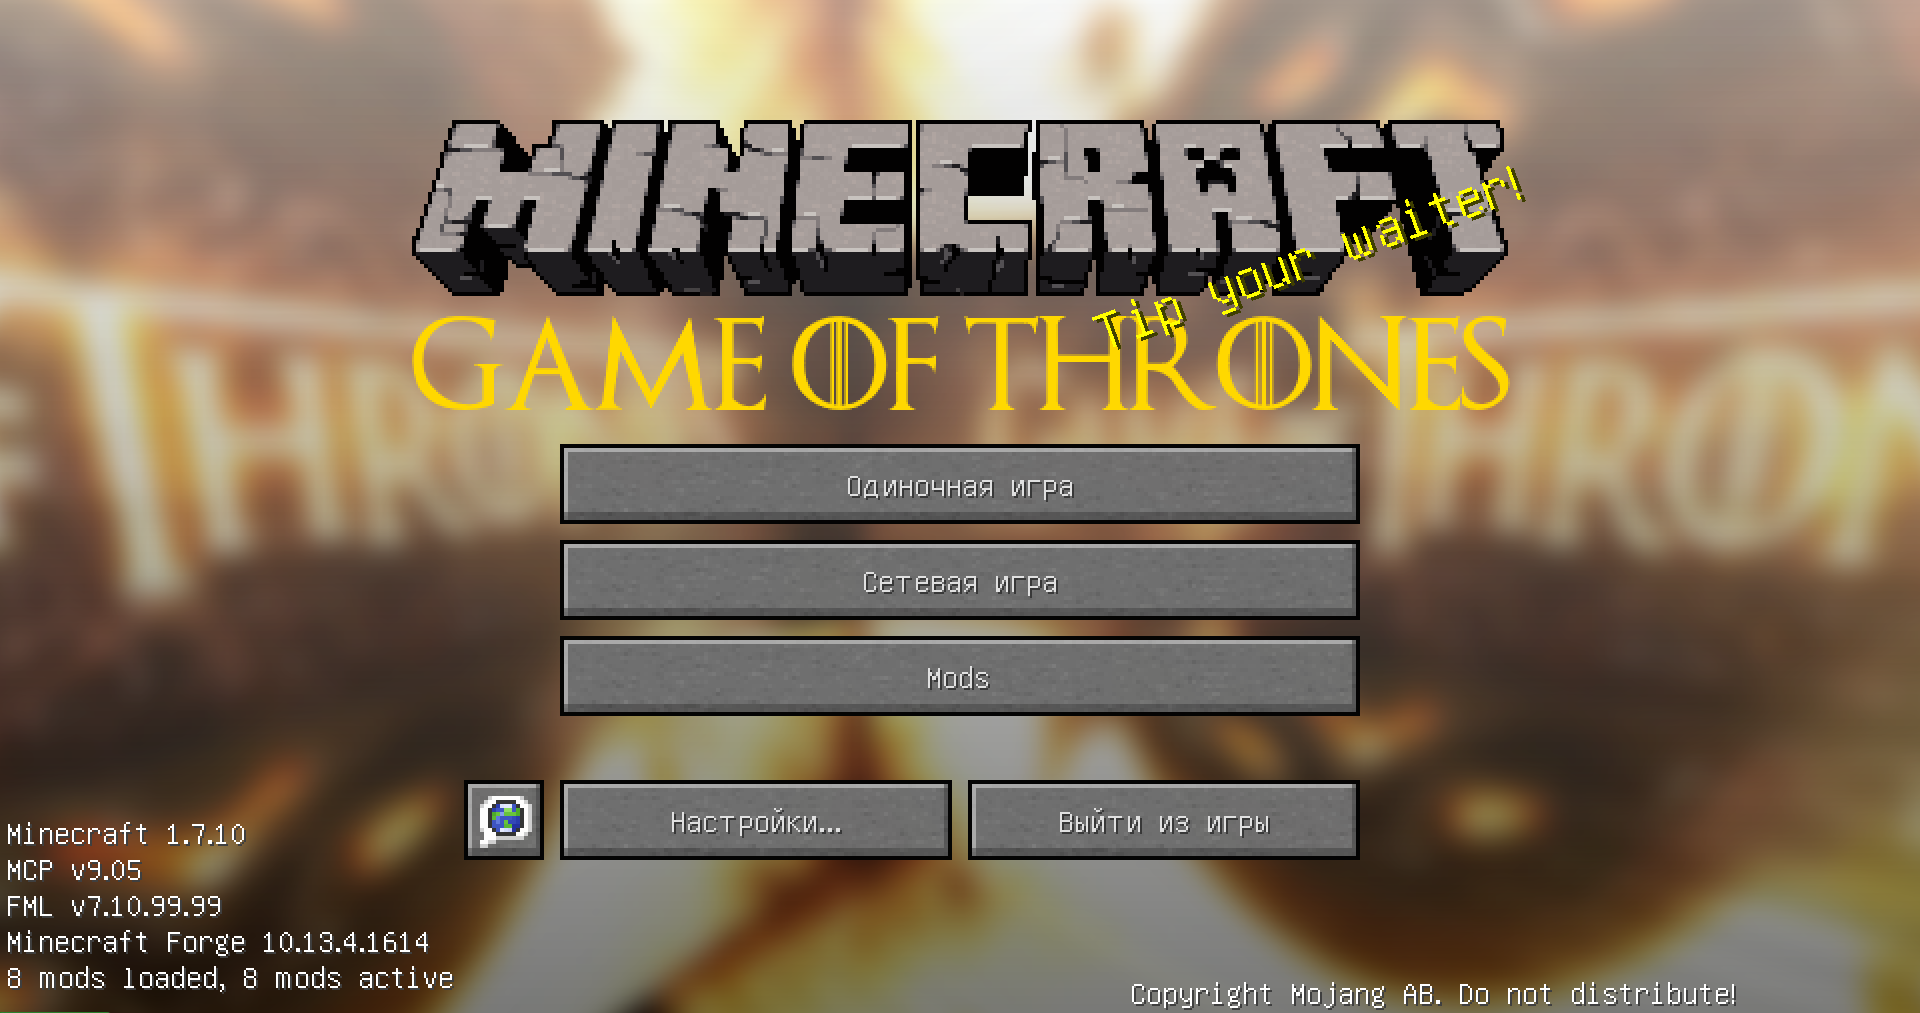 Game of Thrones no game Minecraft - 06/07/2012 - Tec